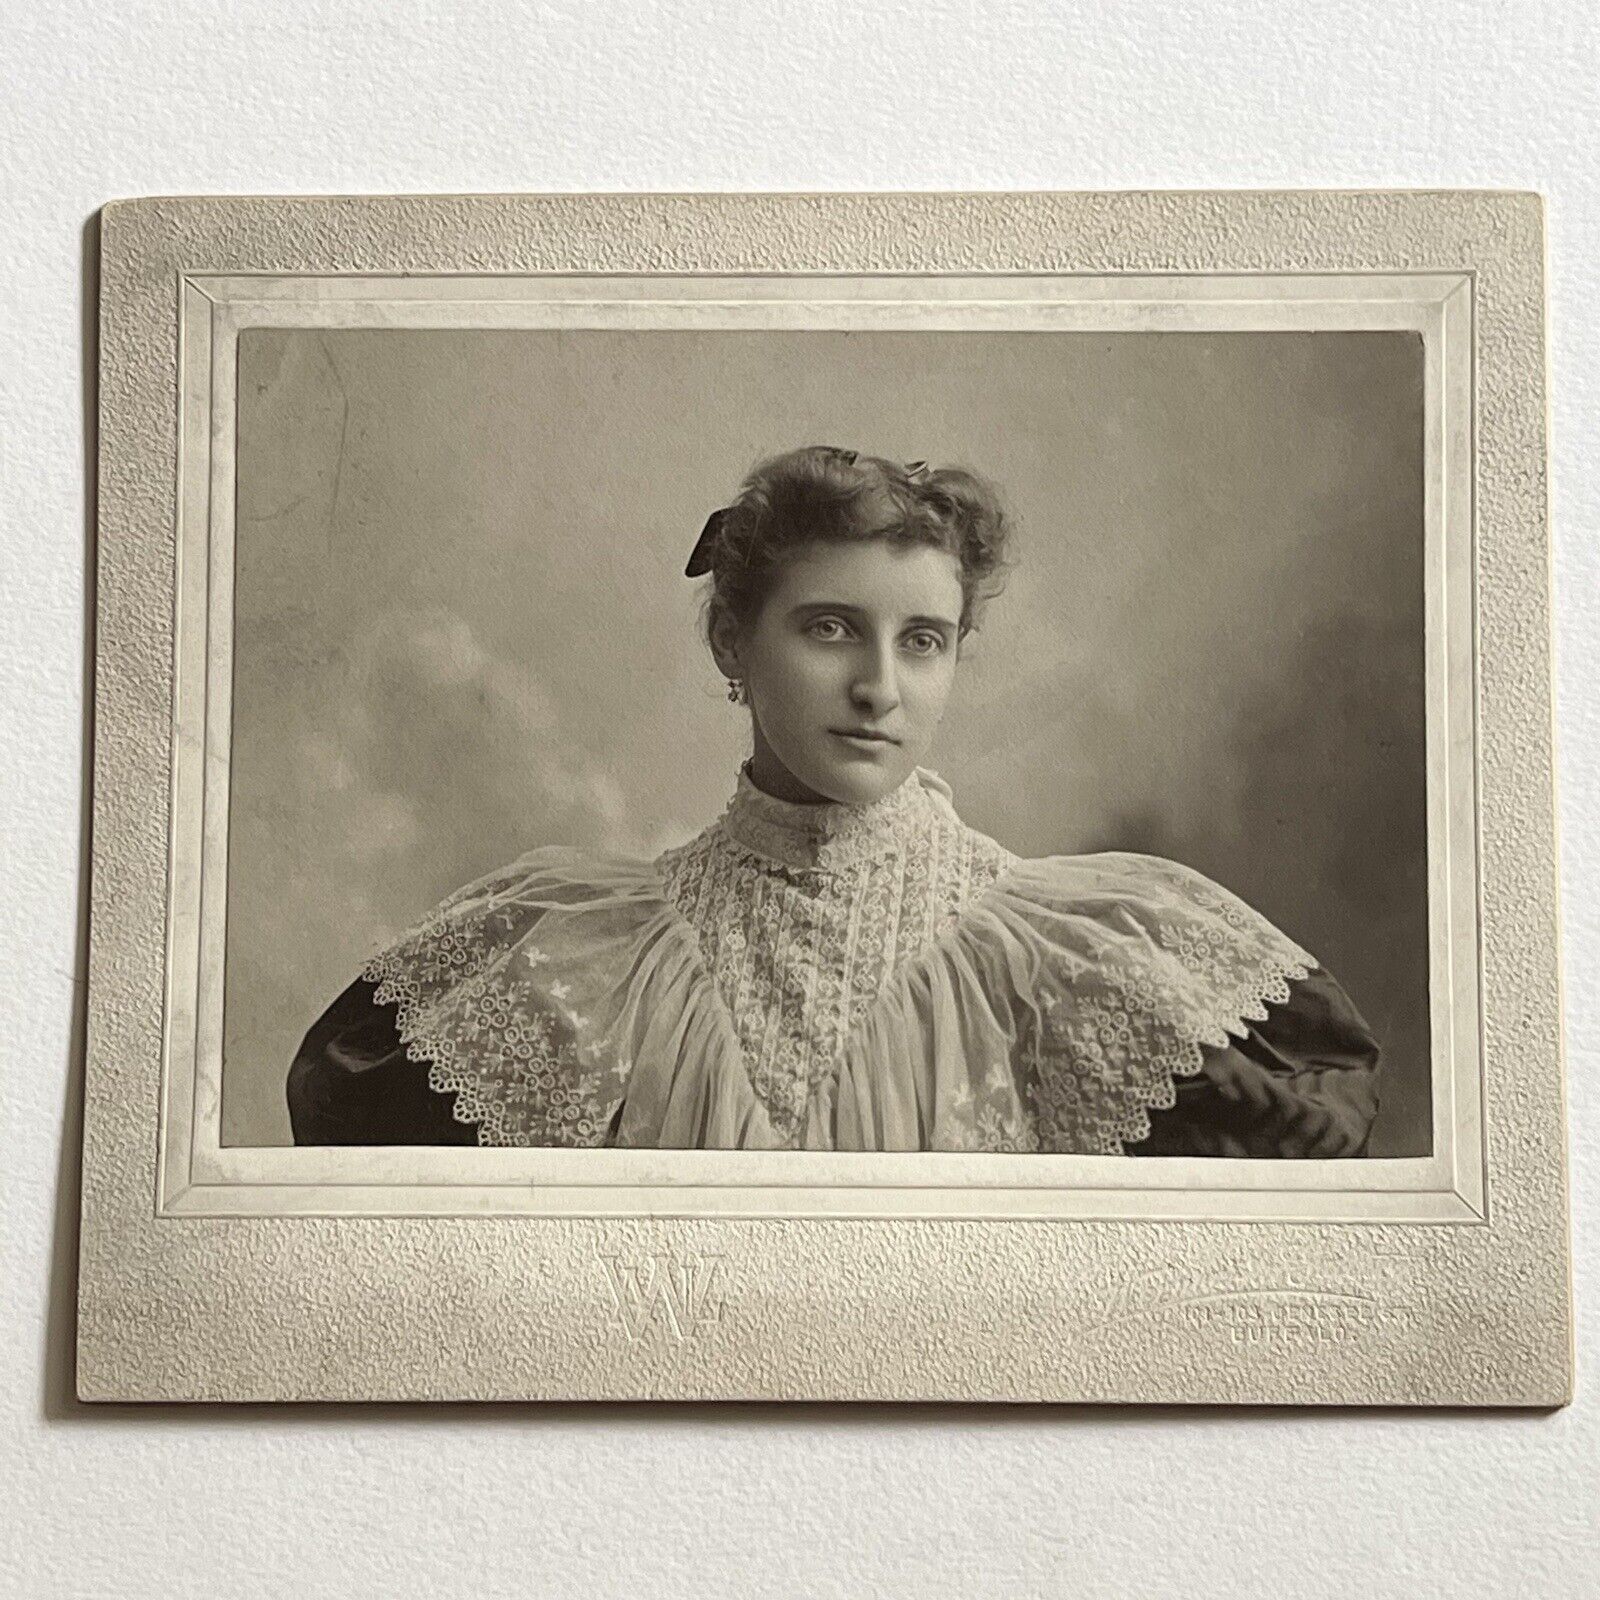 Antique Cabinet Card Photograph Beautiful Fashionable Young Woman Buffalo NY